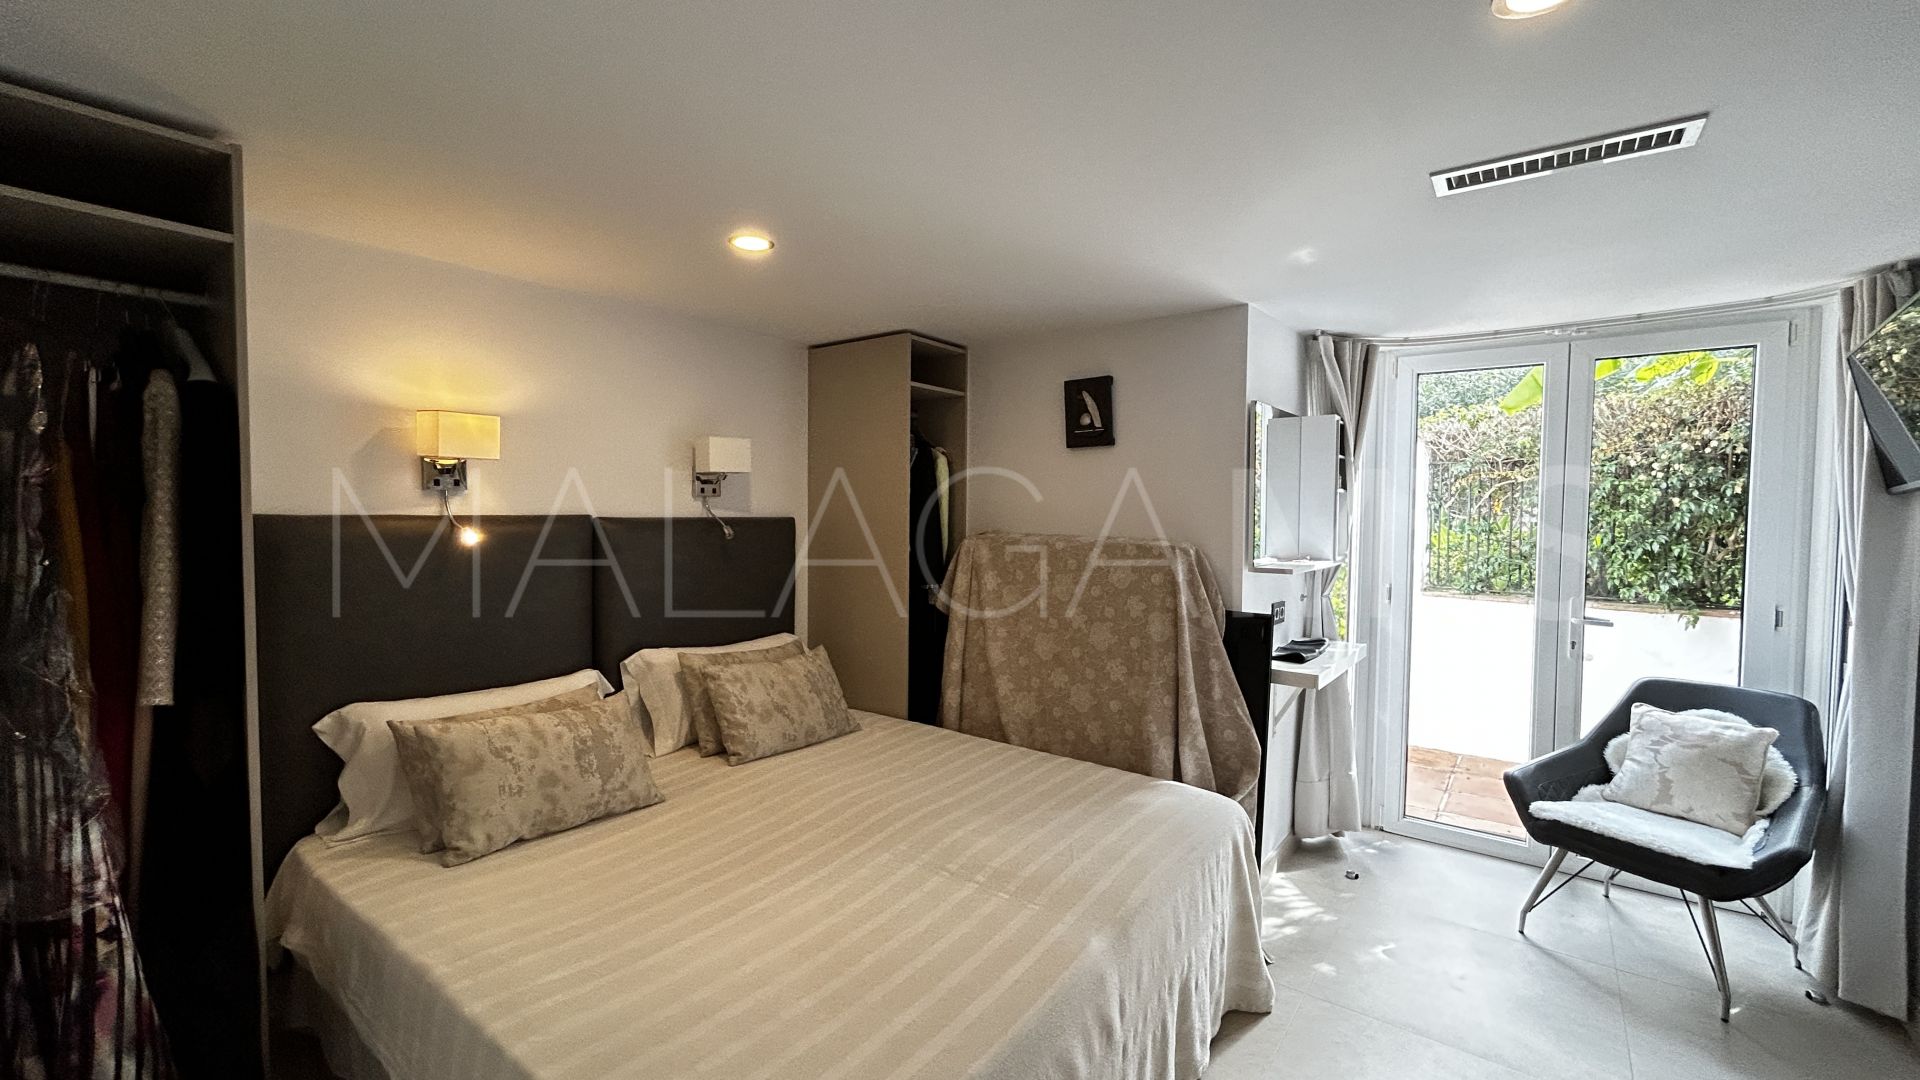 For sale villa in Linda Vista Baja with 8 bedrooms